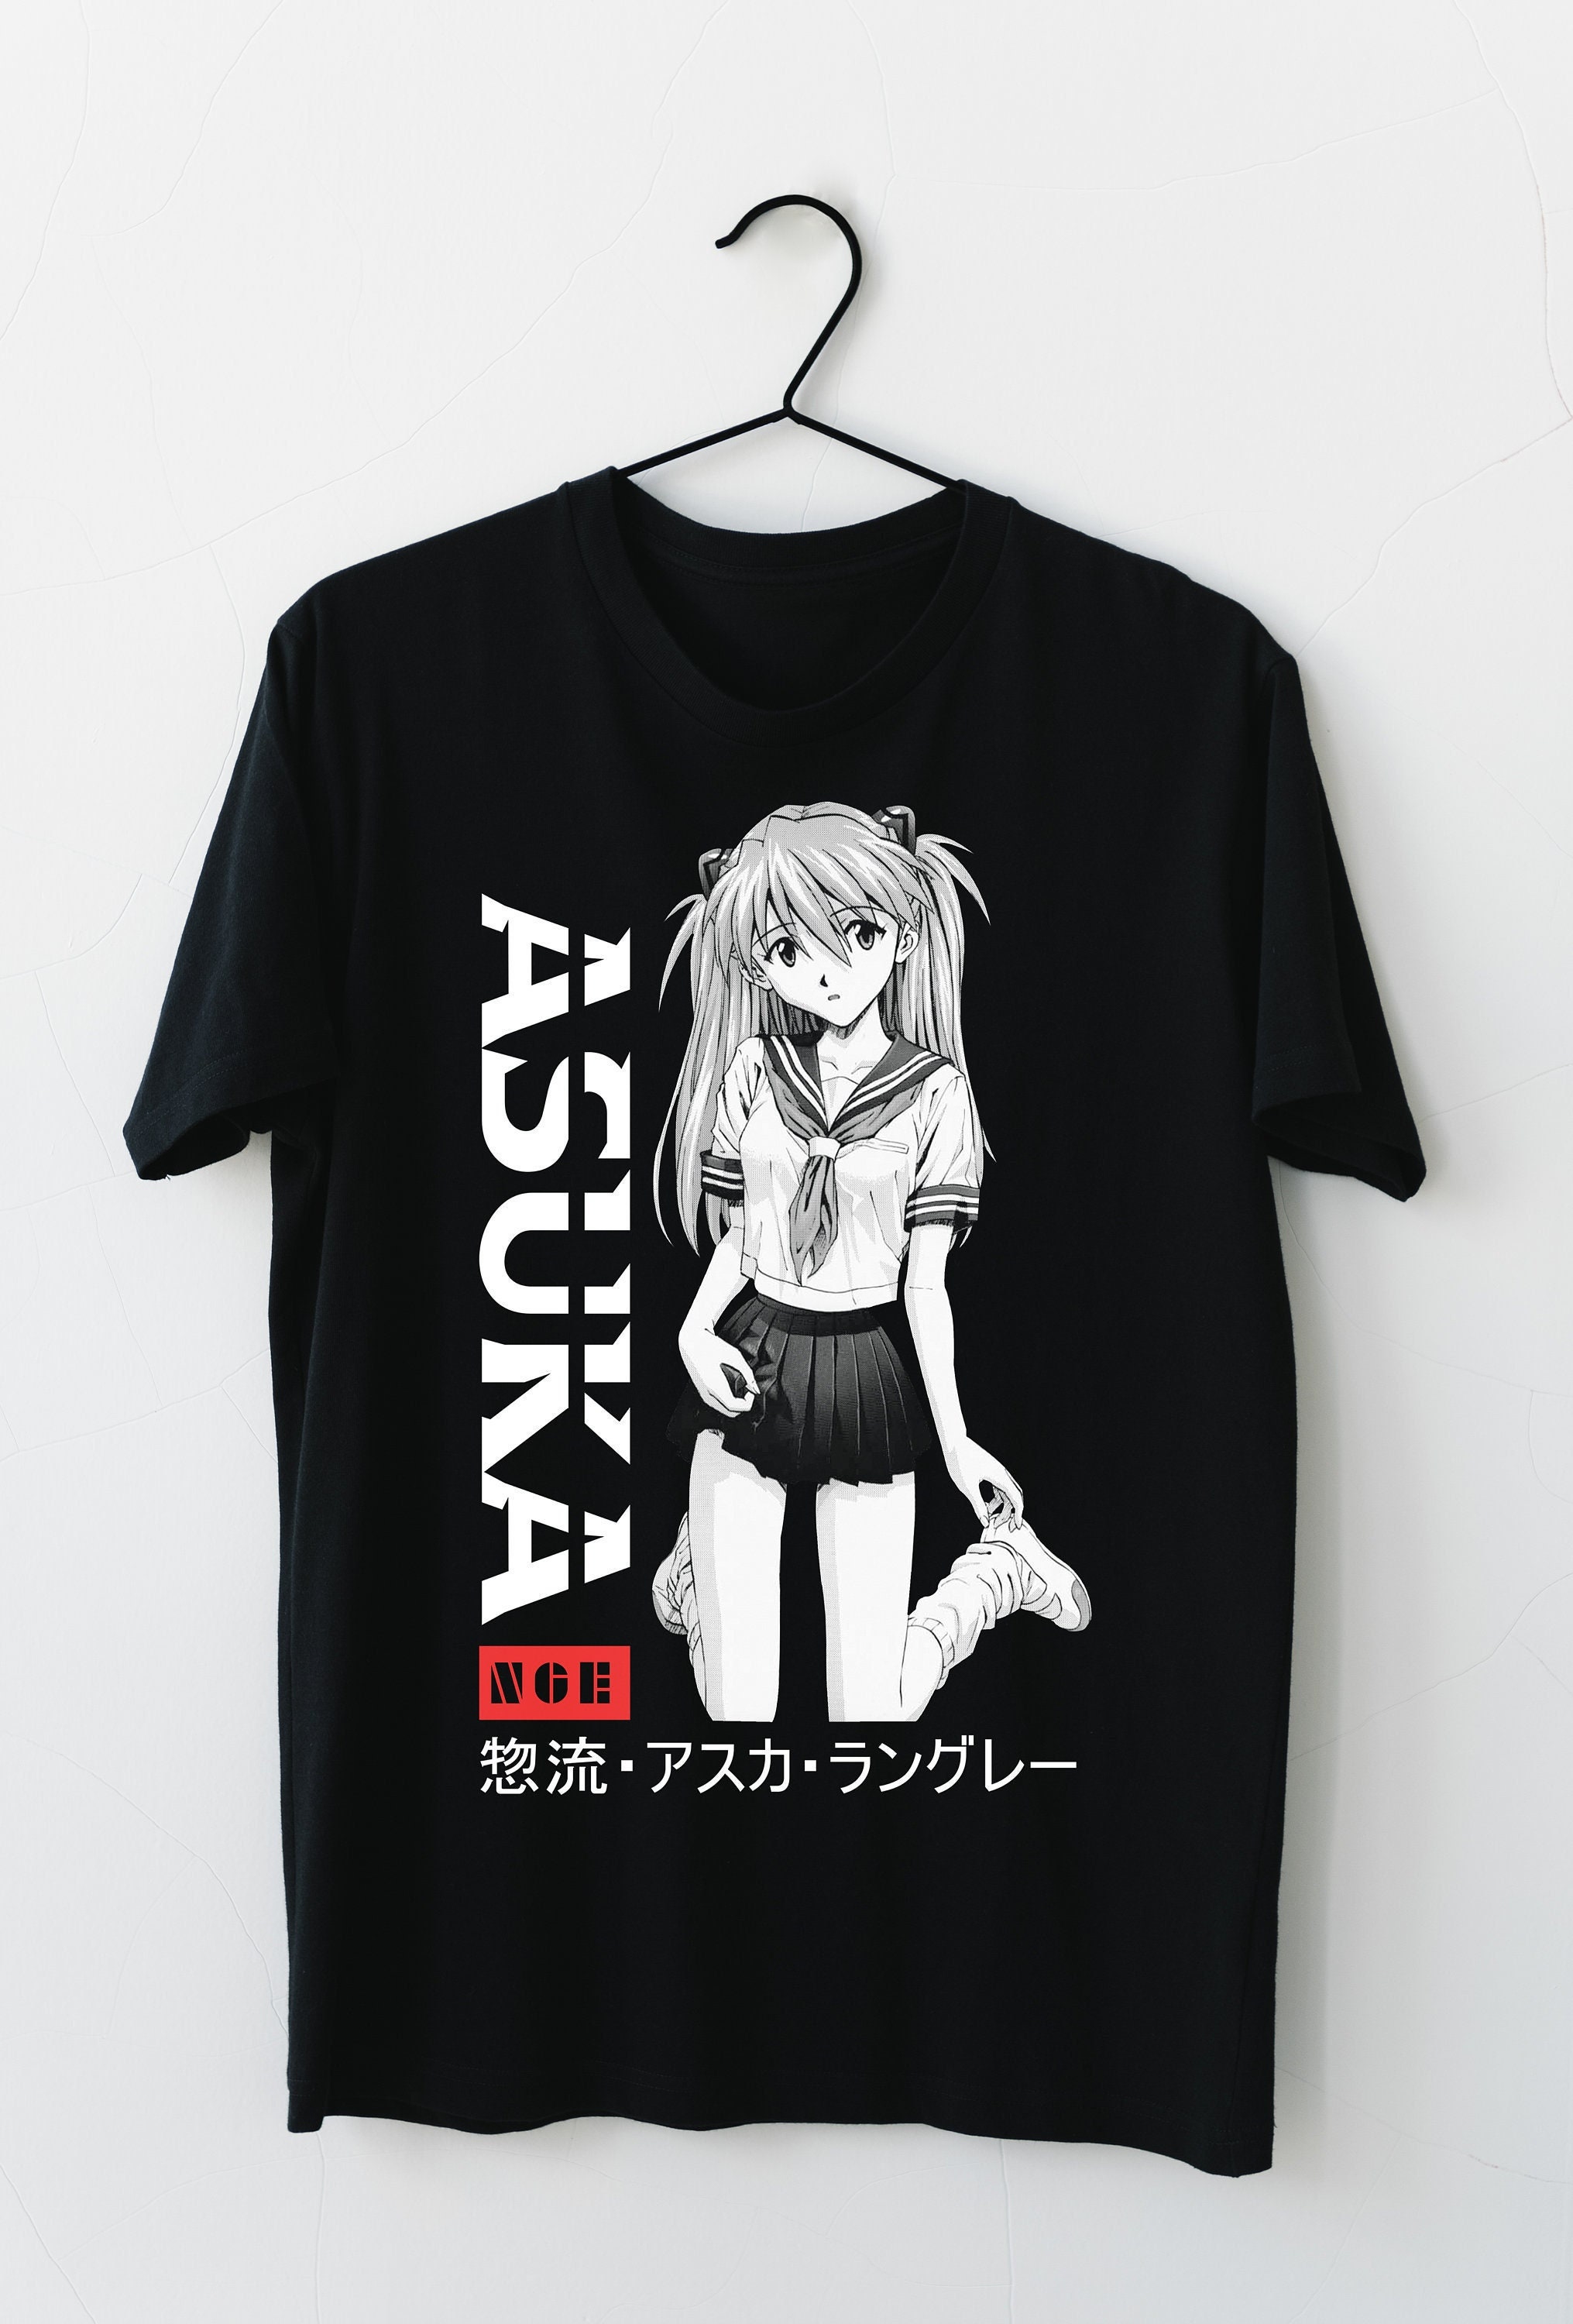 Asuka Neon Genesis Evangelion Eva 01 Anime Asuka Langley Soryu Unisex T Shirt Teeruto 5271